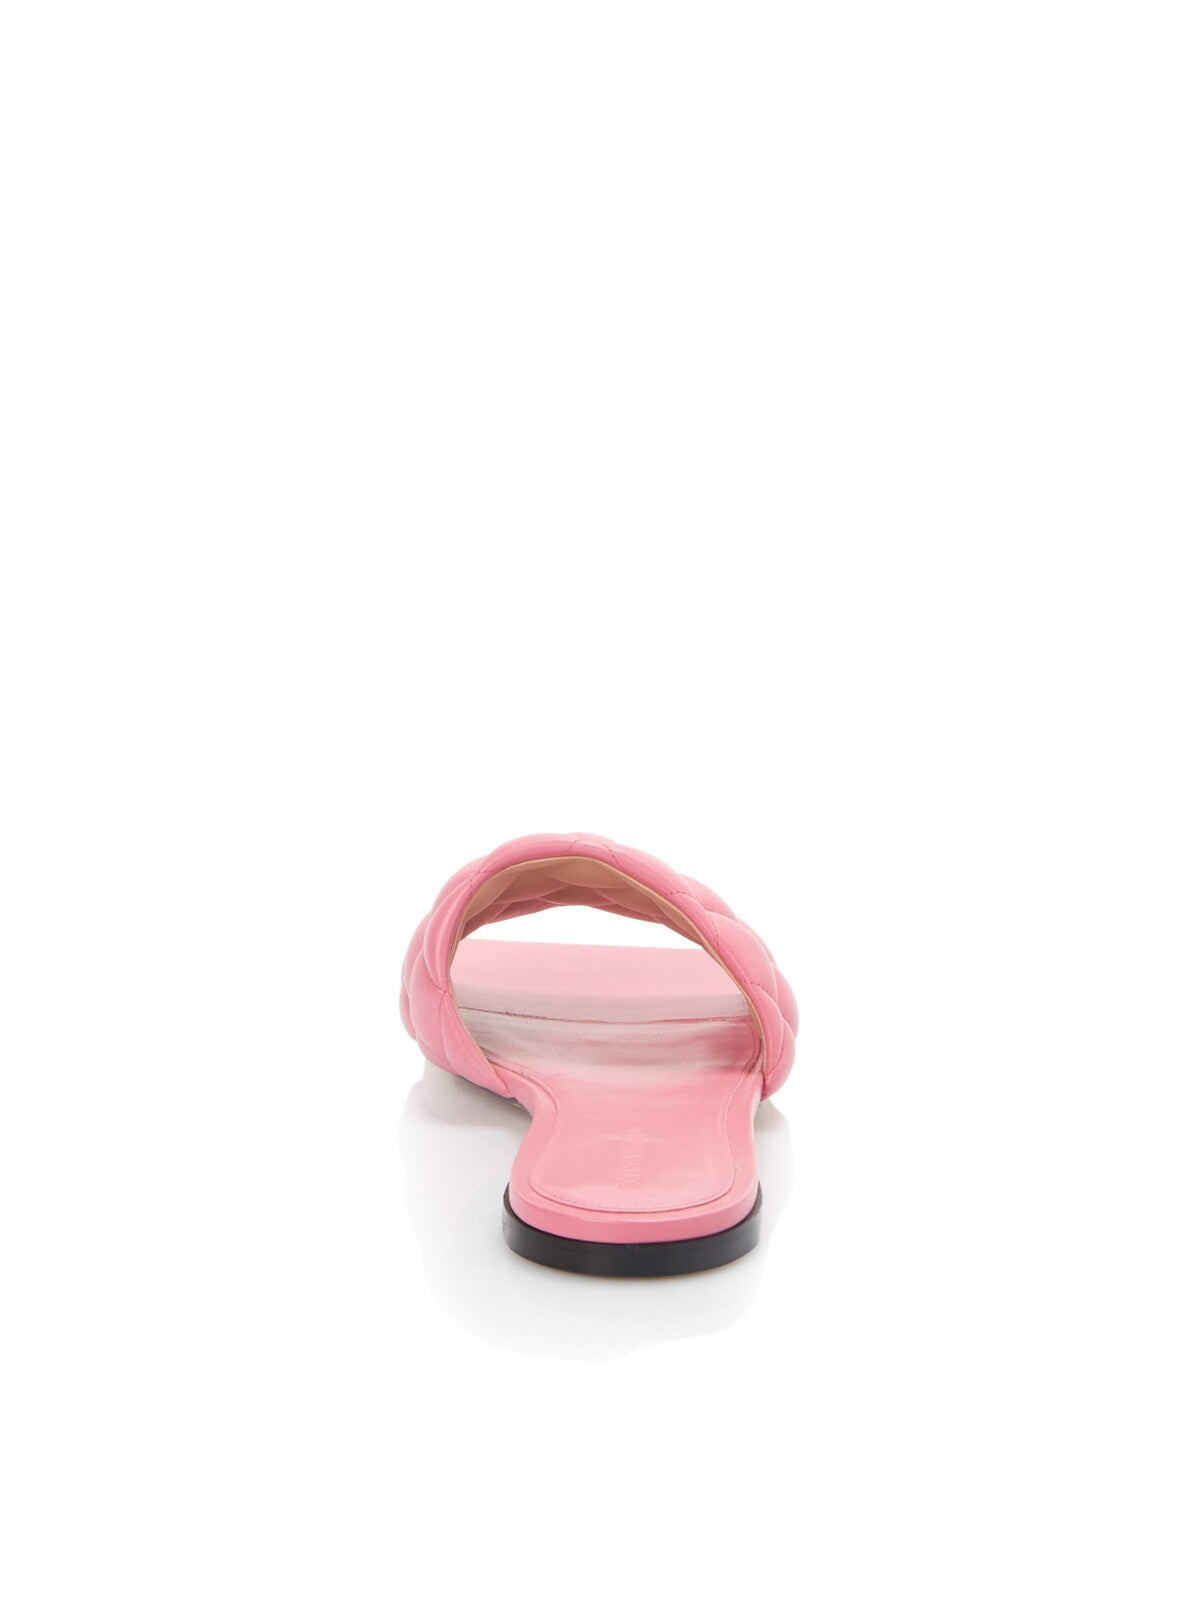 BOTTEGA VENETA Womens Pink Quilted Square Toe Slip On Leather Flats Shoes 36.5